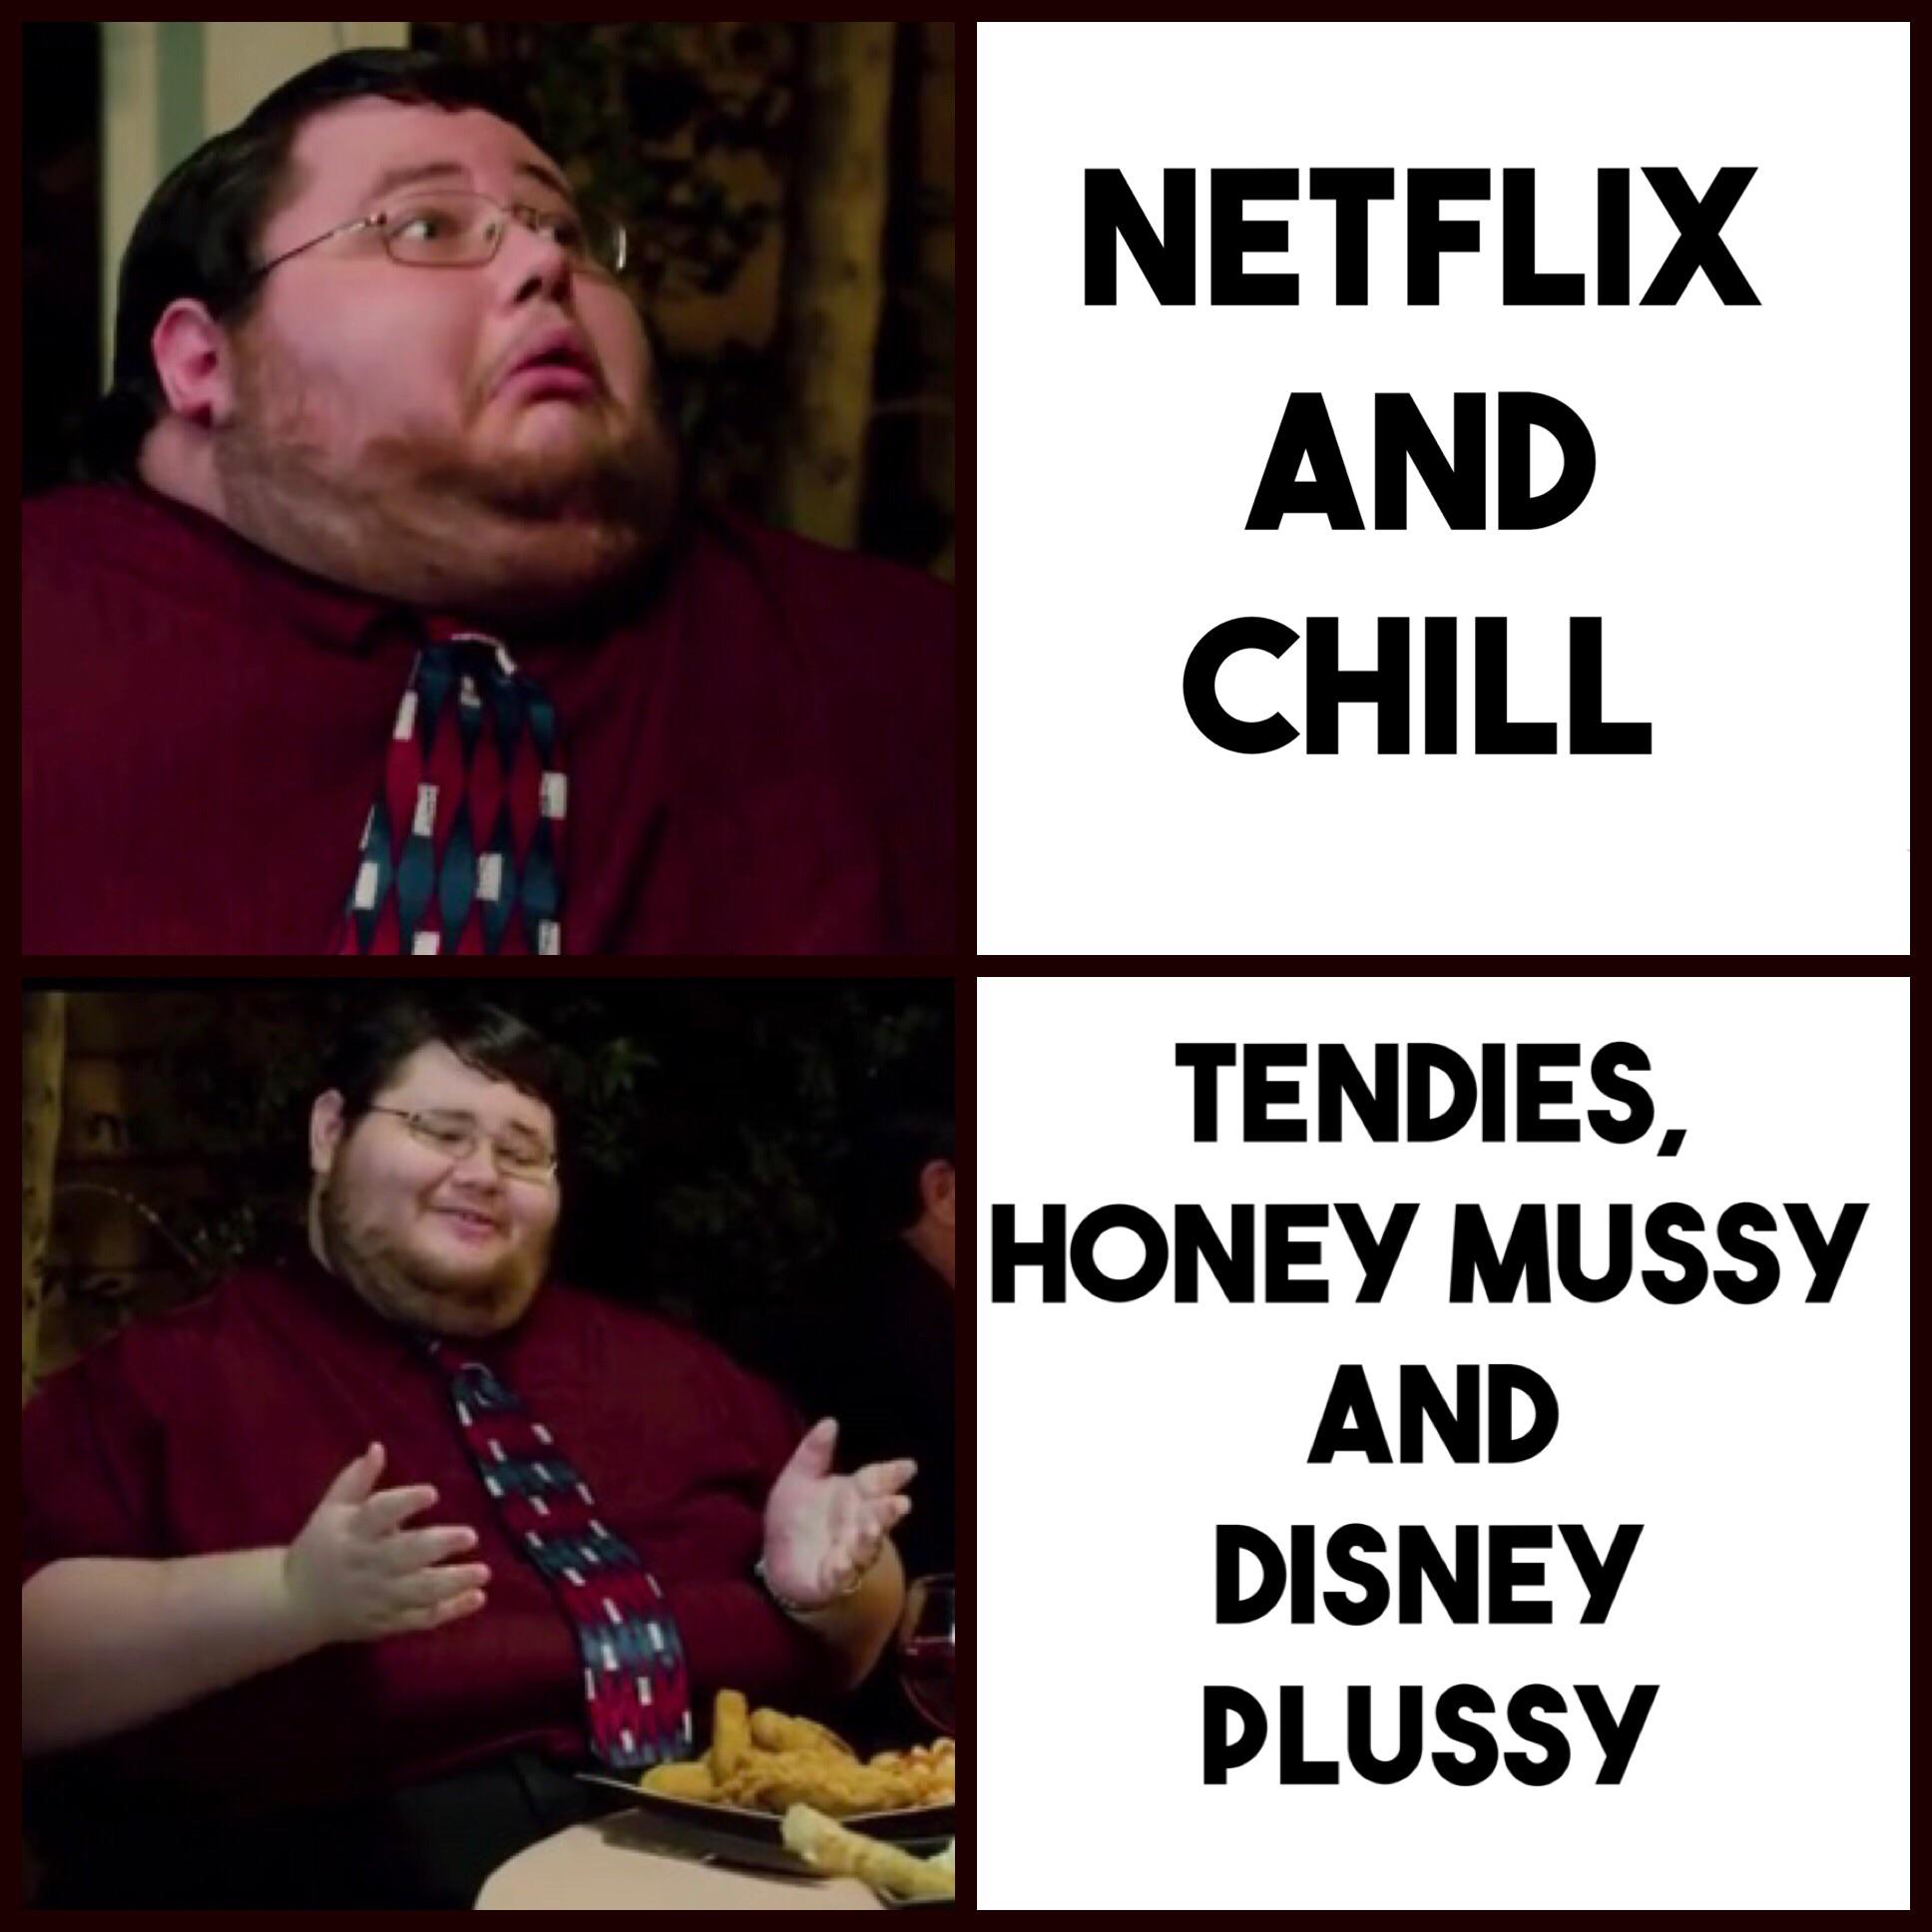 super cringey pics - honey mussy and disney plussy - Netflix And Chill Tendies, Honey Mussy And Disney Plussy